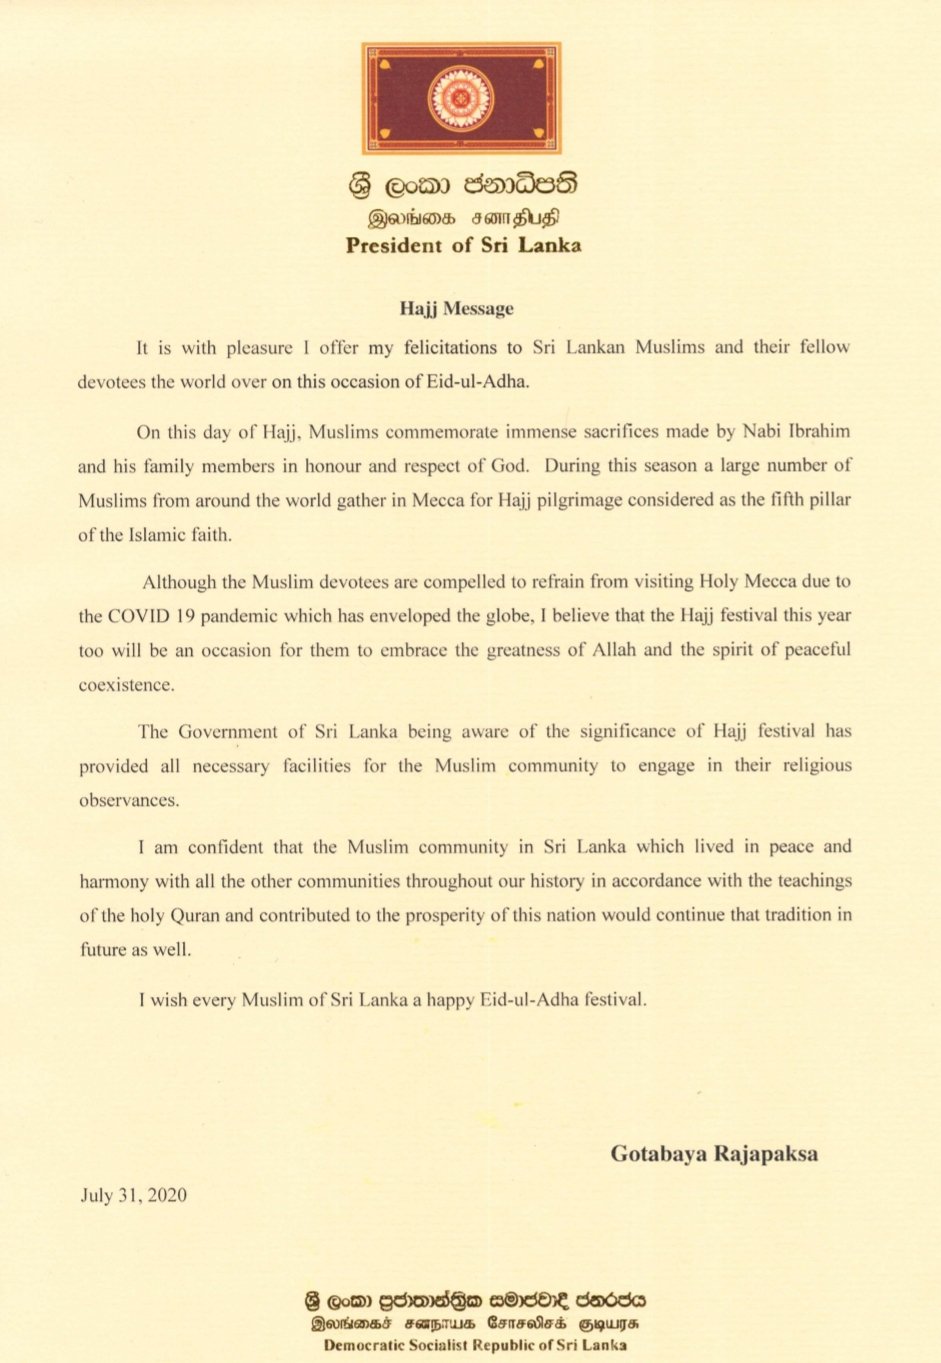 Message of His Excellency Gotabaya Rajapaksa, President of Sri Lanka on the occasion of Eid-ul-Adha